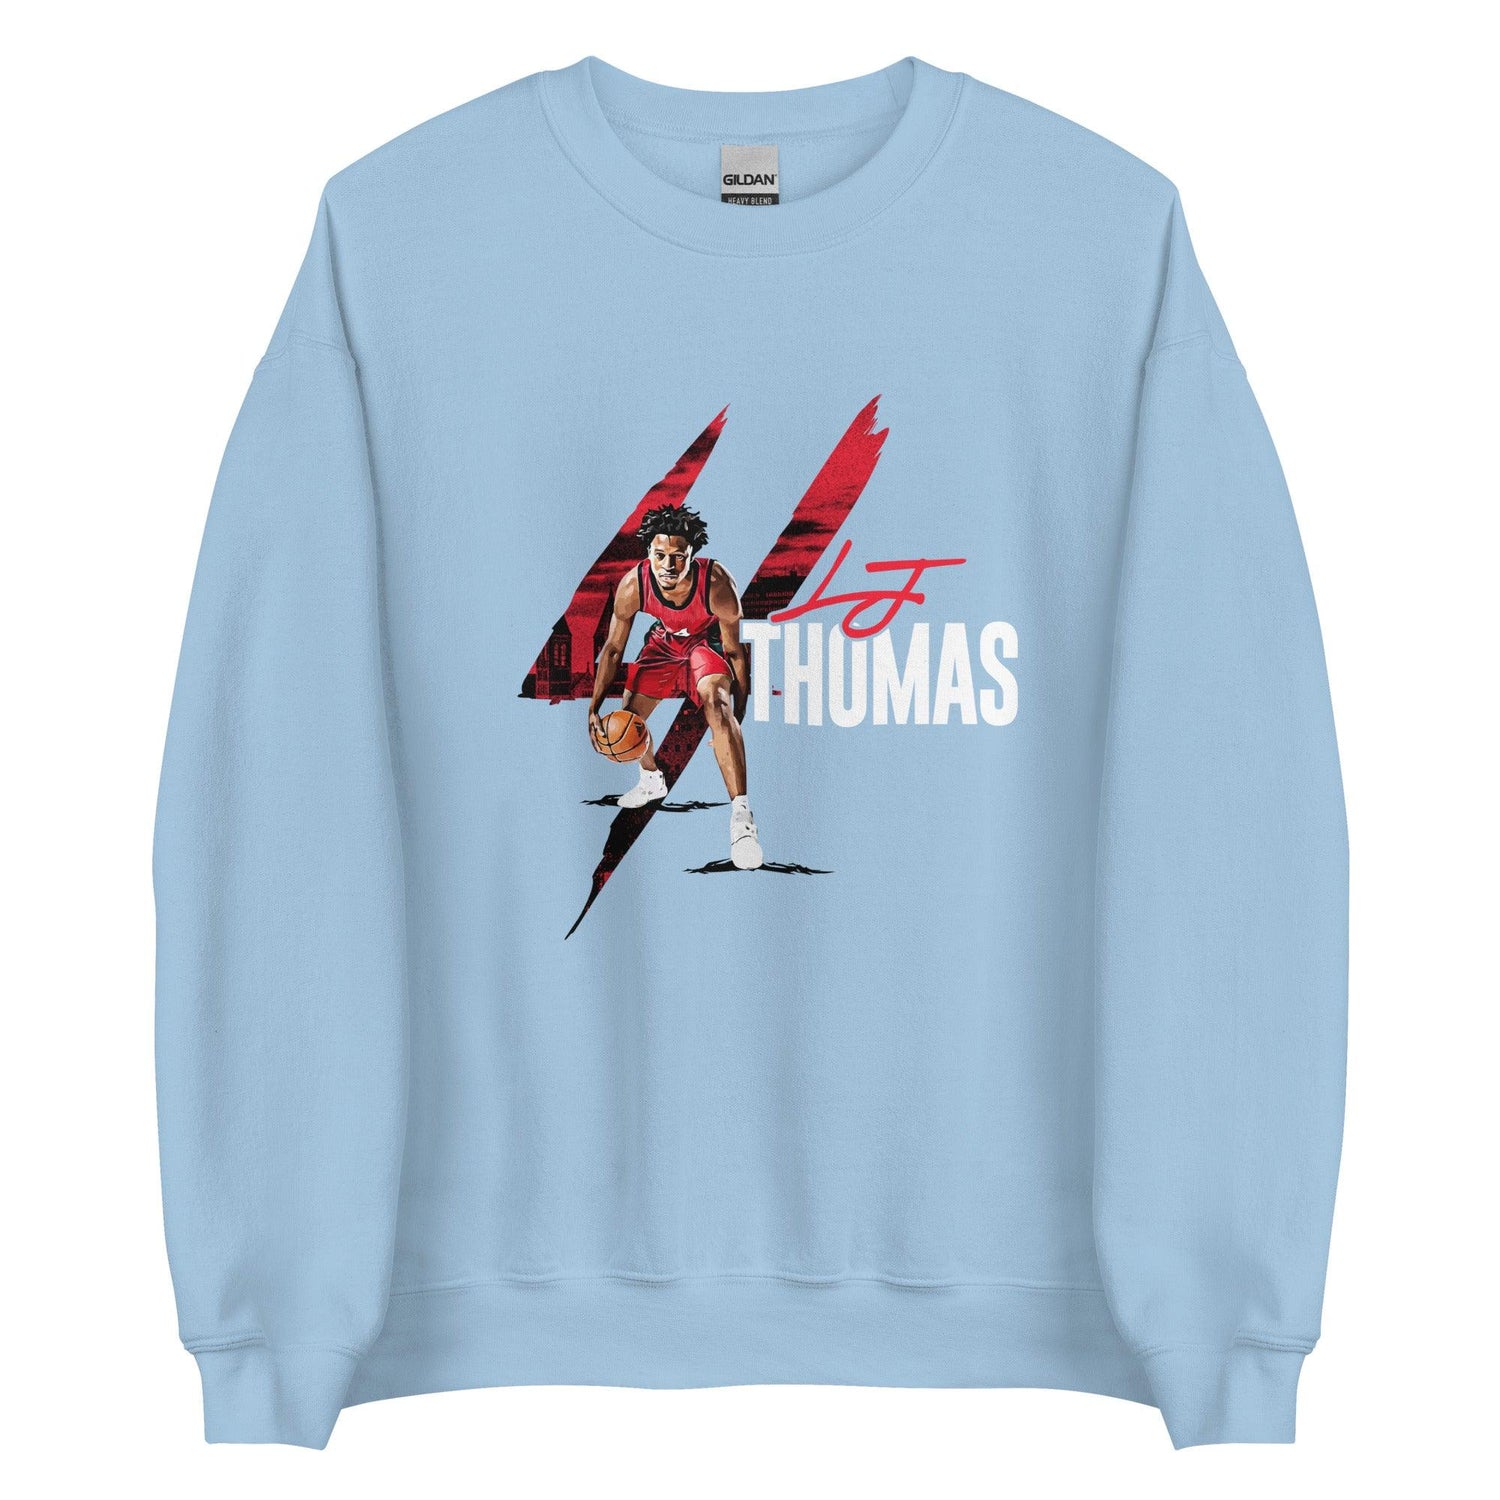 LJ Thomas "Essential" Sweatshirt - Fan Arch